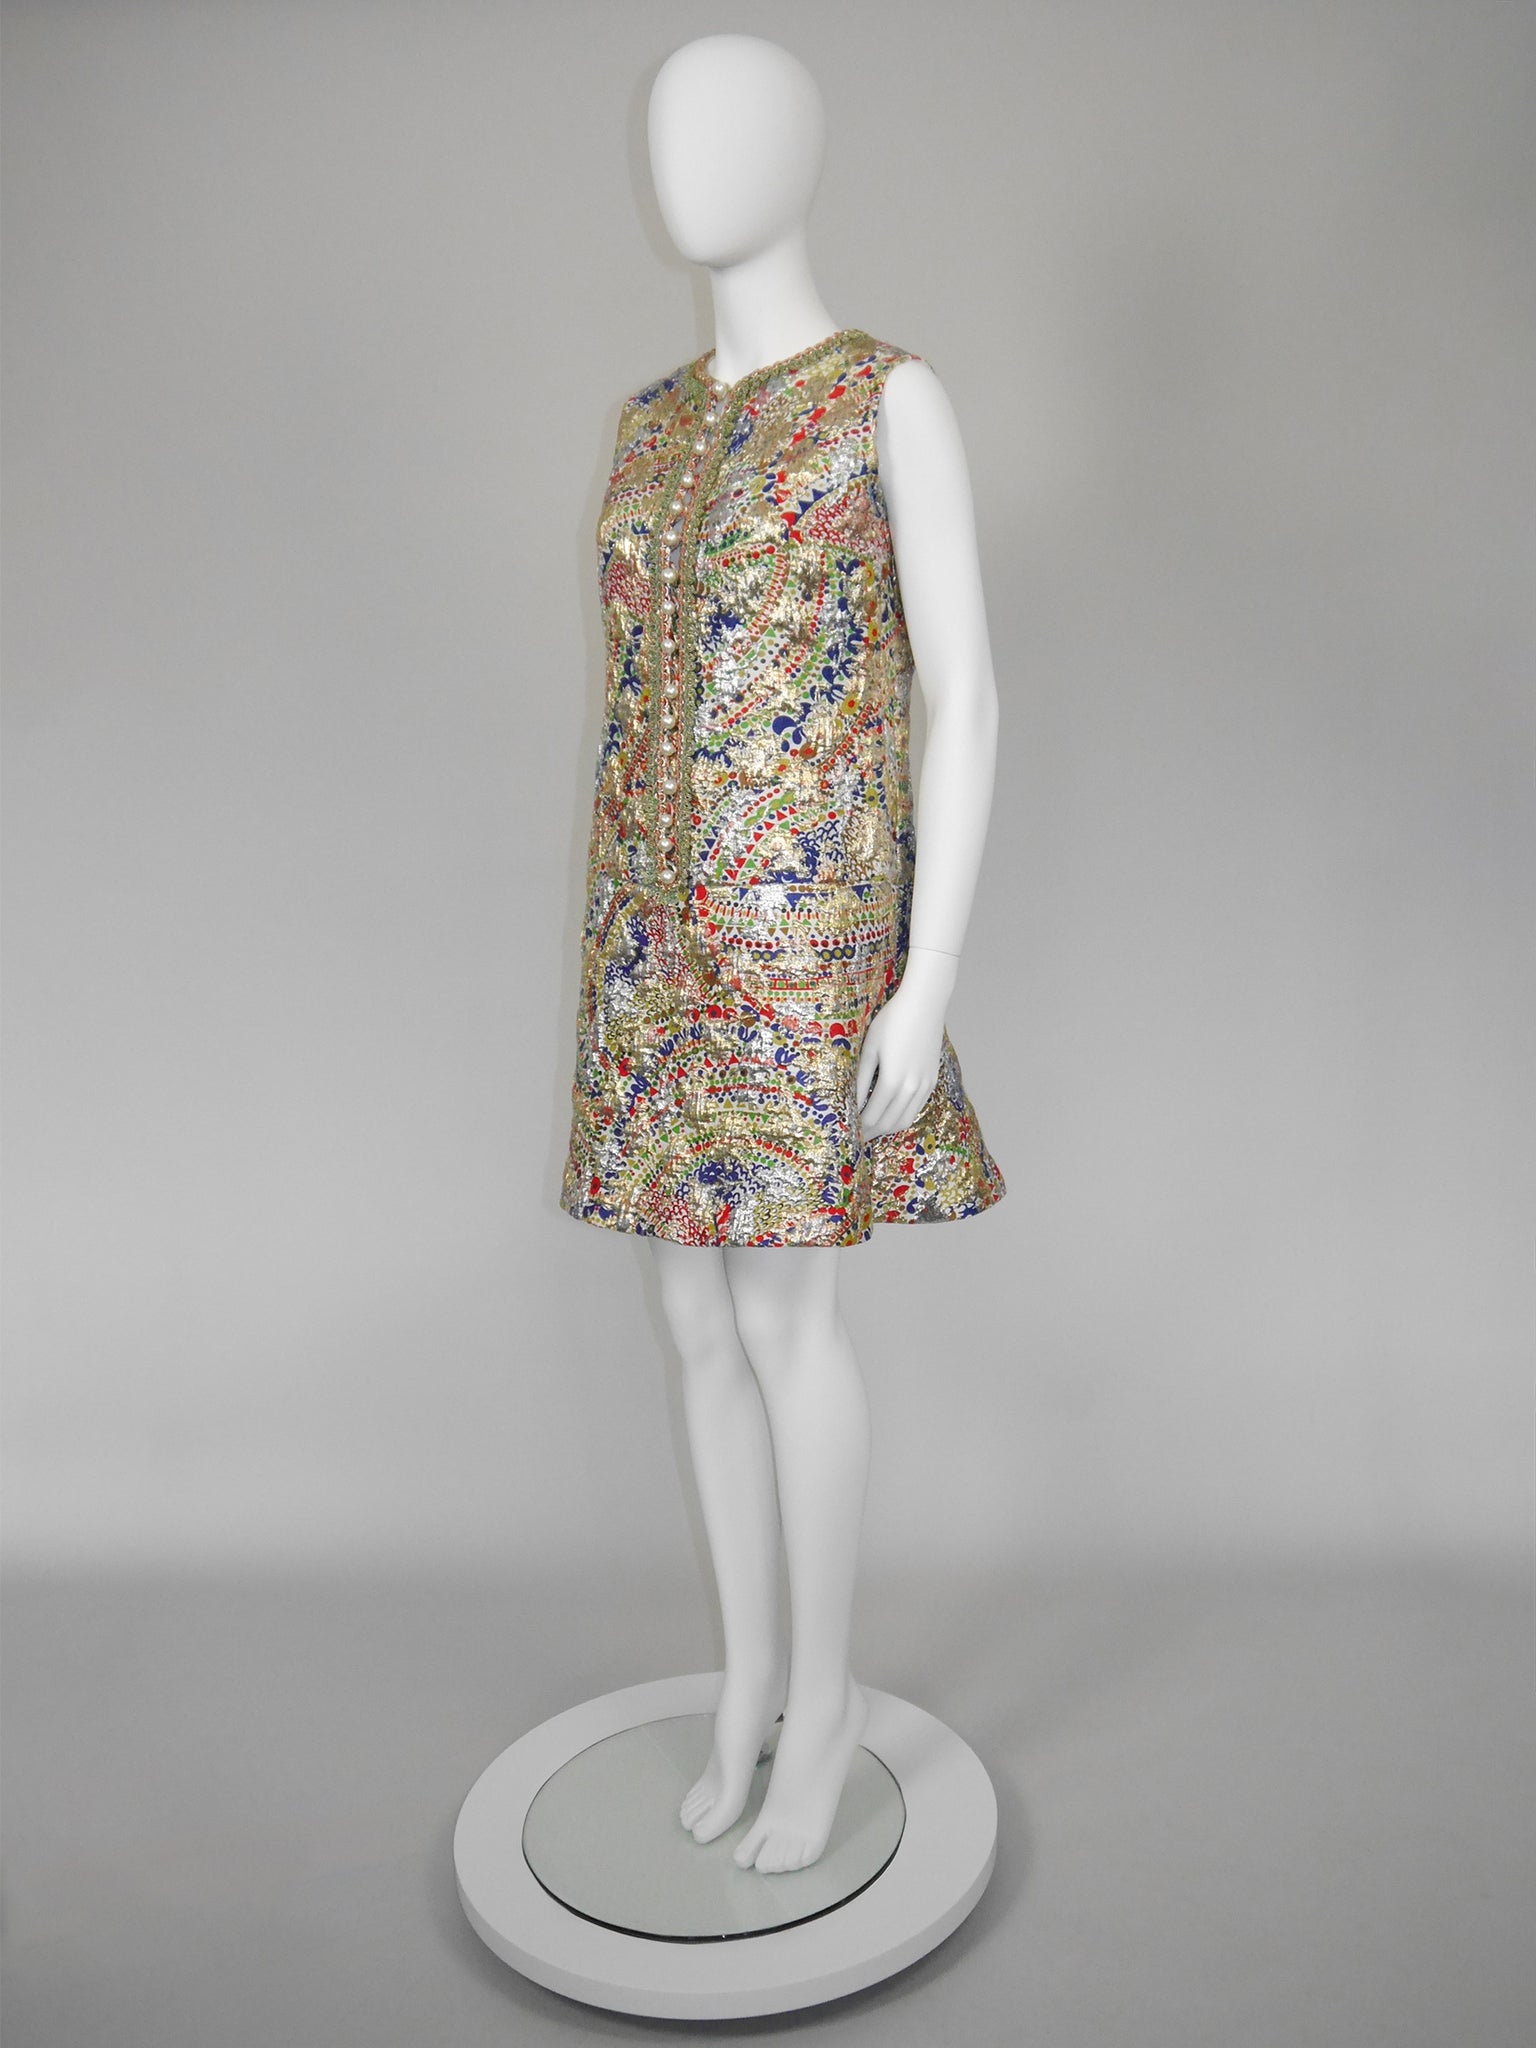 LANVIN 1960s Vintage Couture Metallic Brocade Party Evening Mini Dress Size L